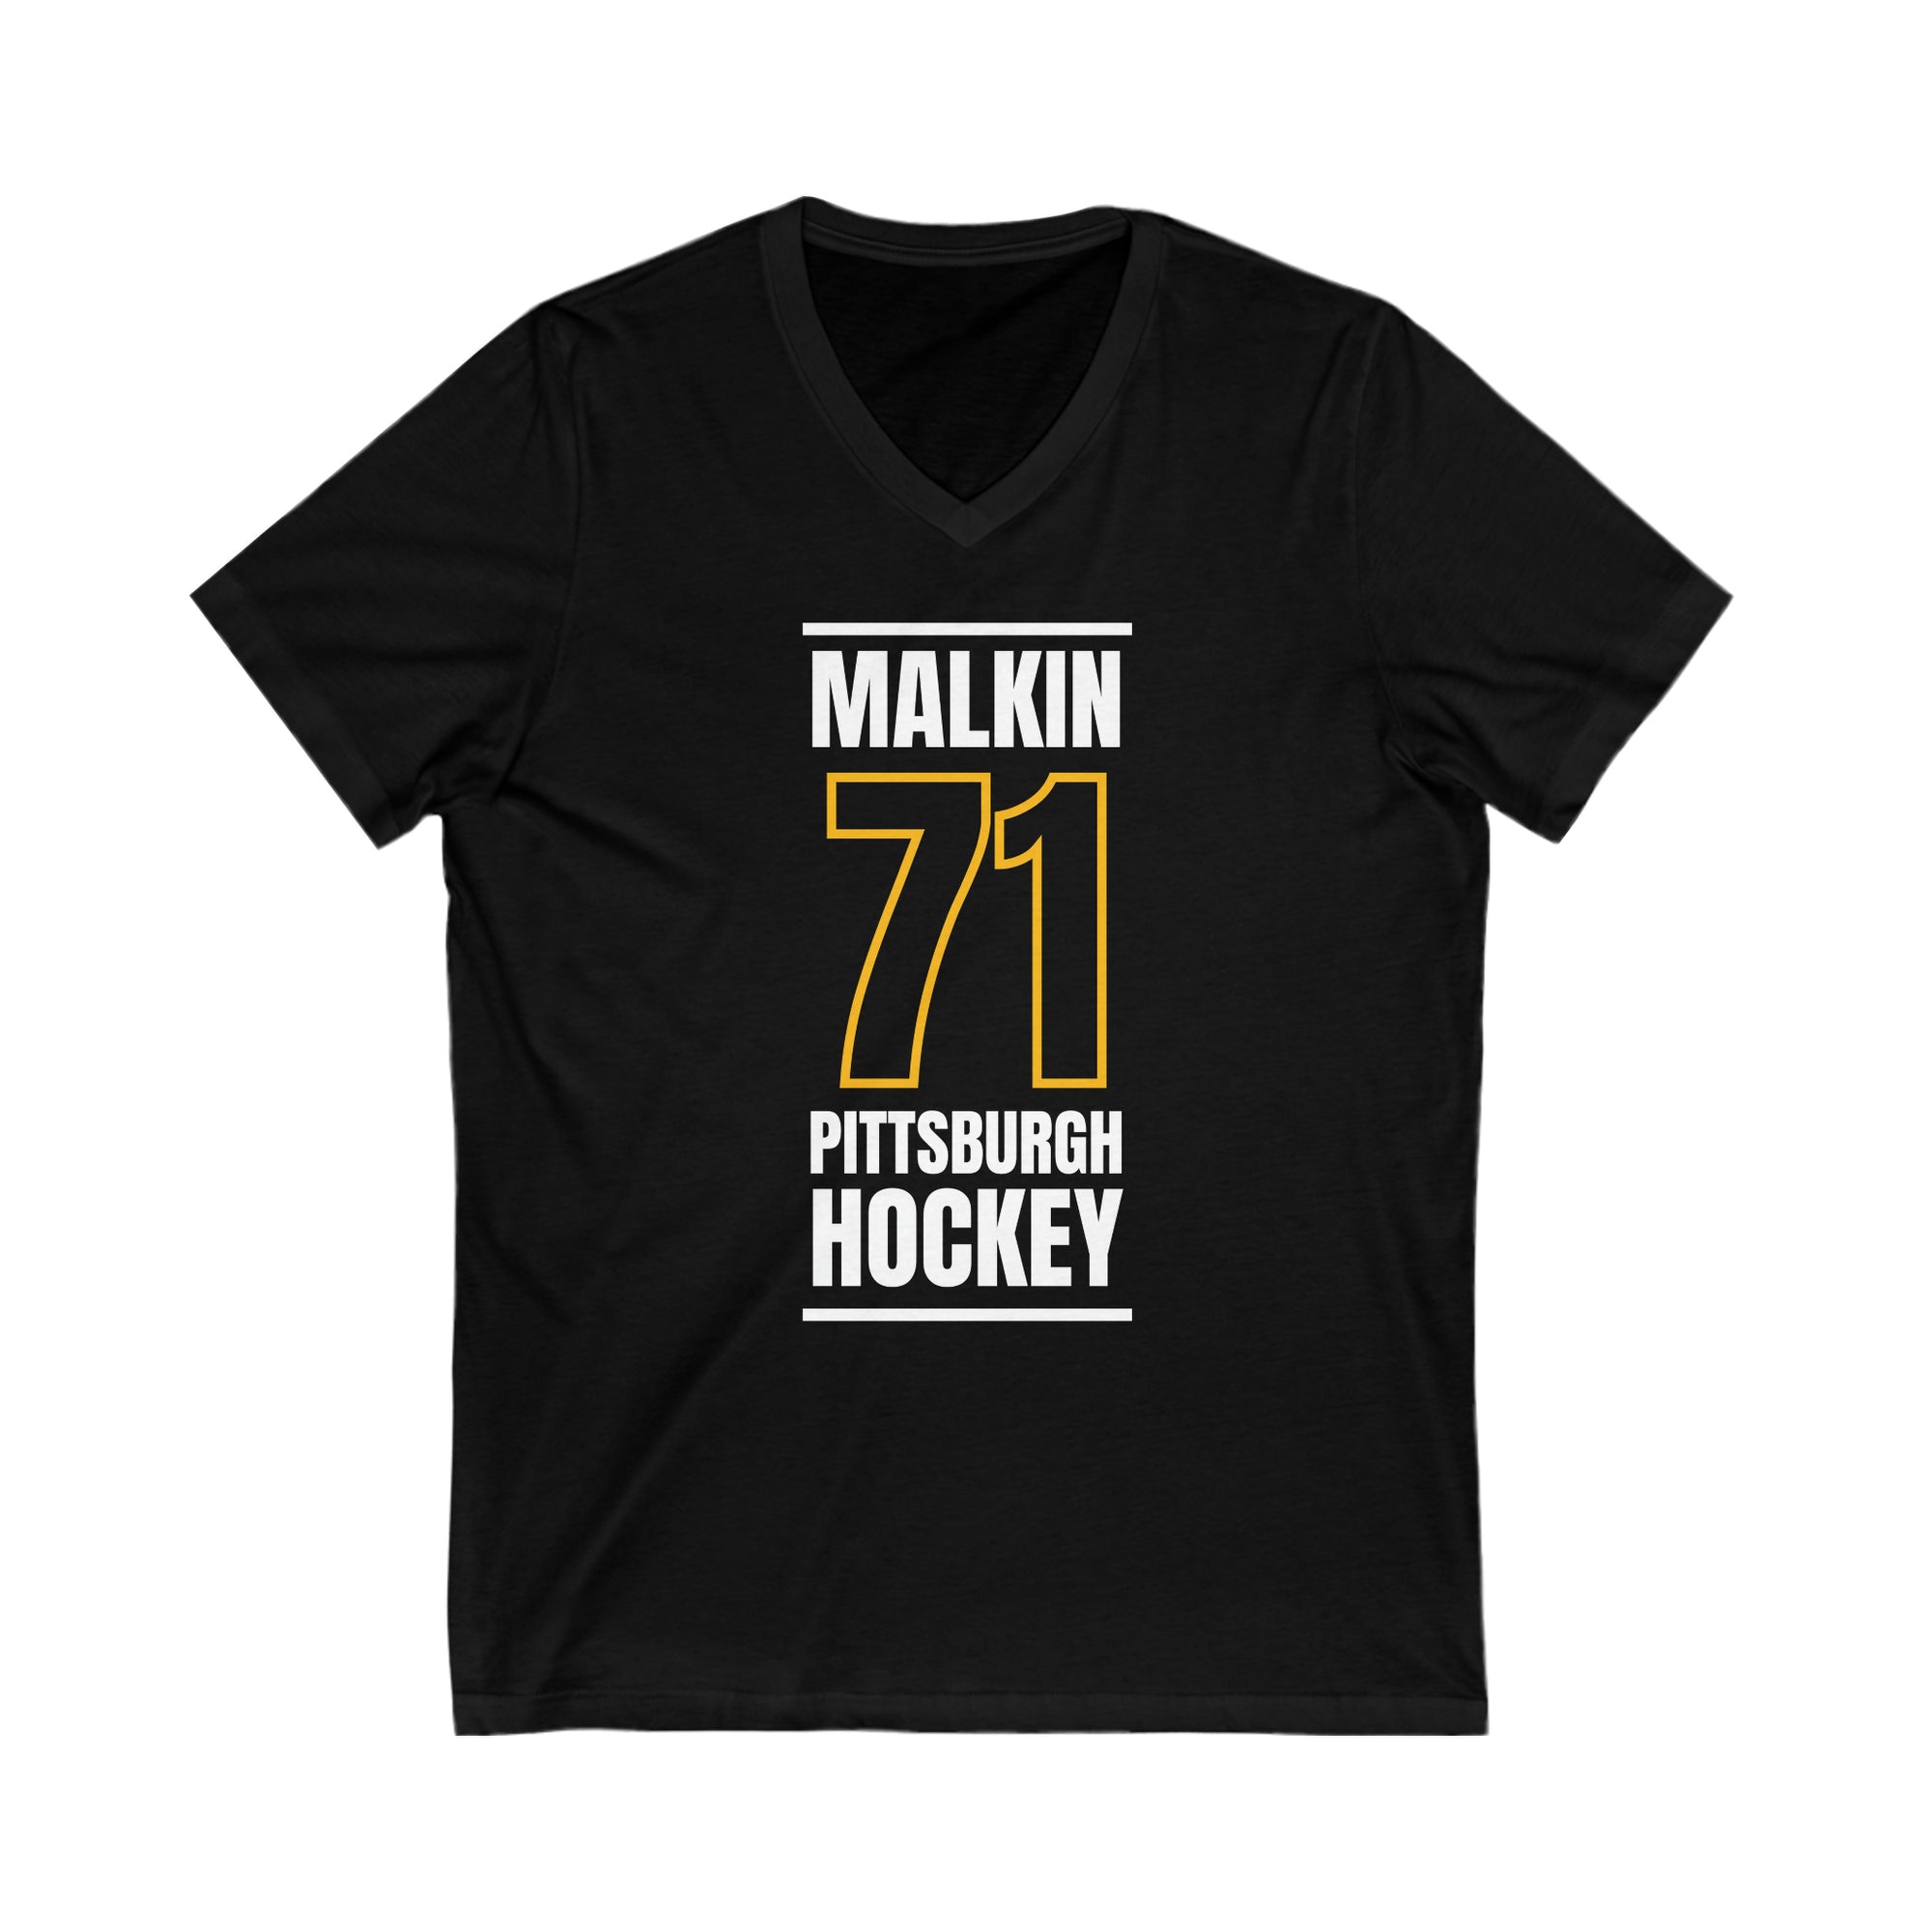 Malkin 71 Pittsburgh Hockey Black Vertical Design Unisex V-Neck Tee